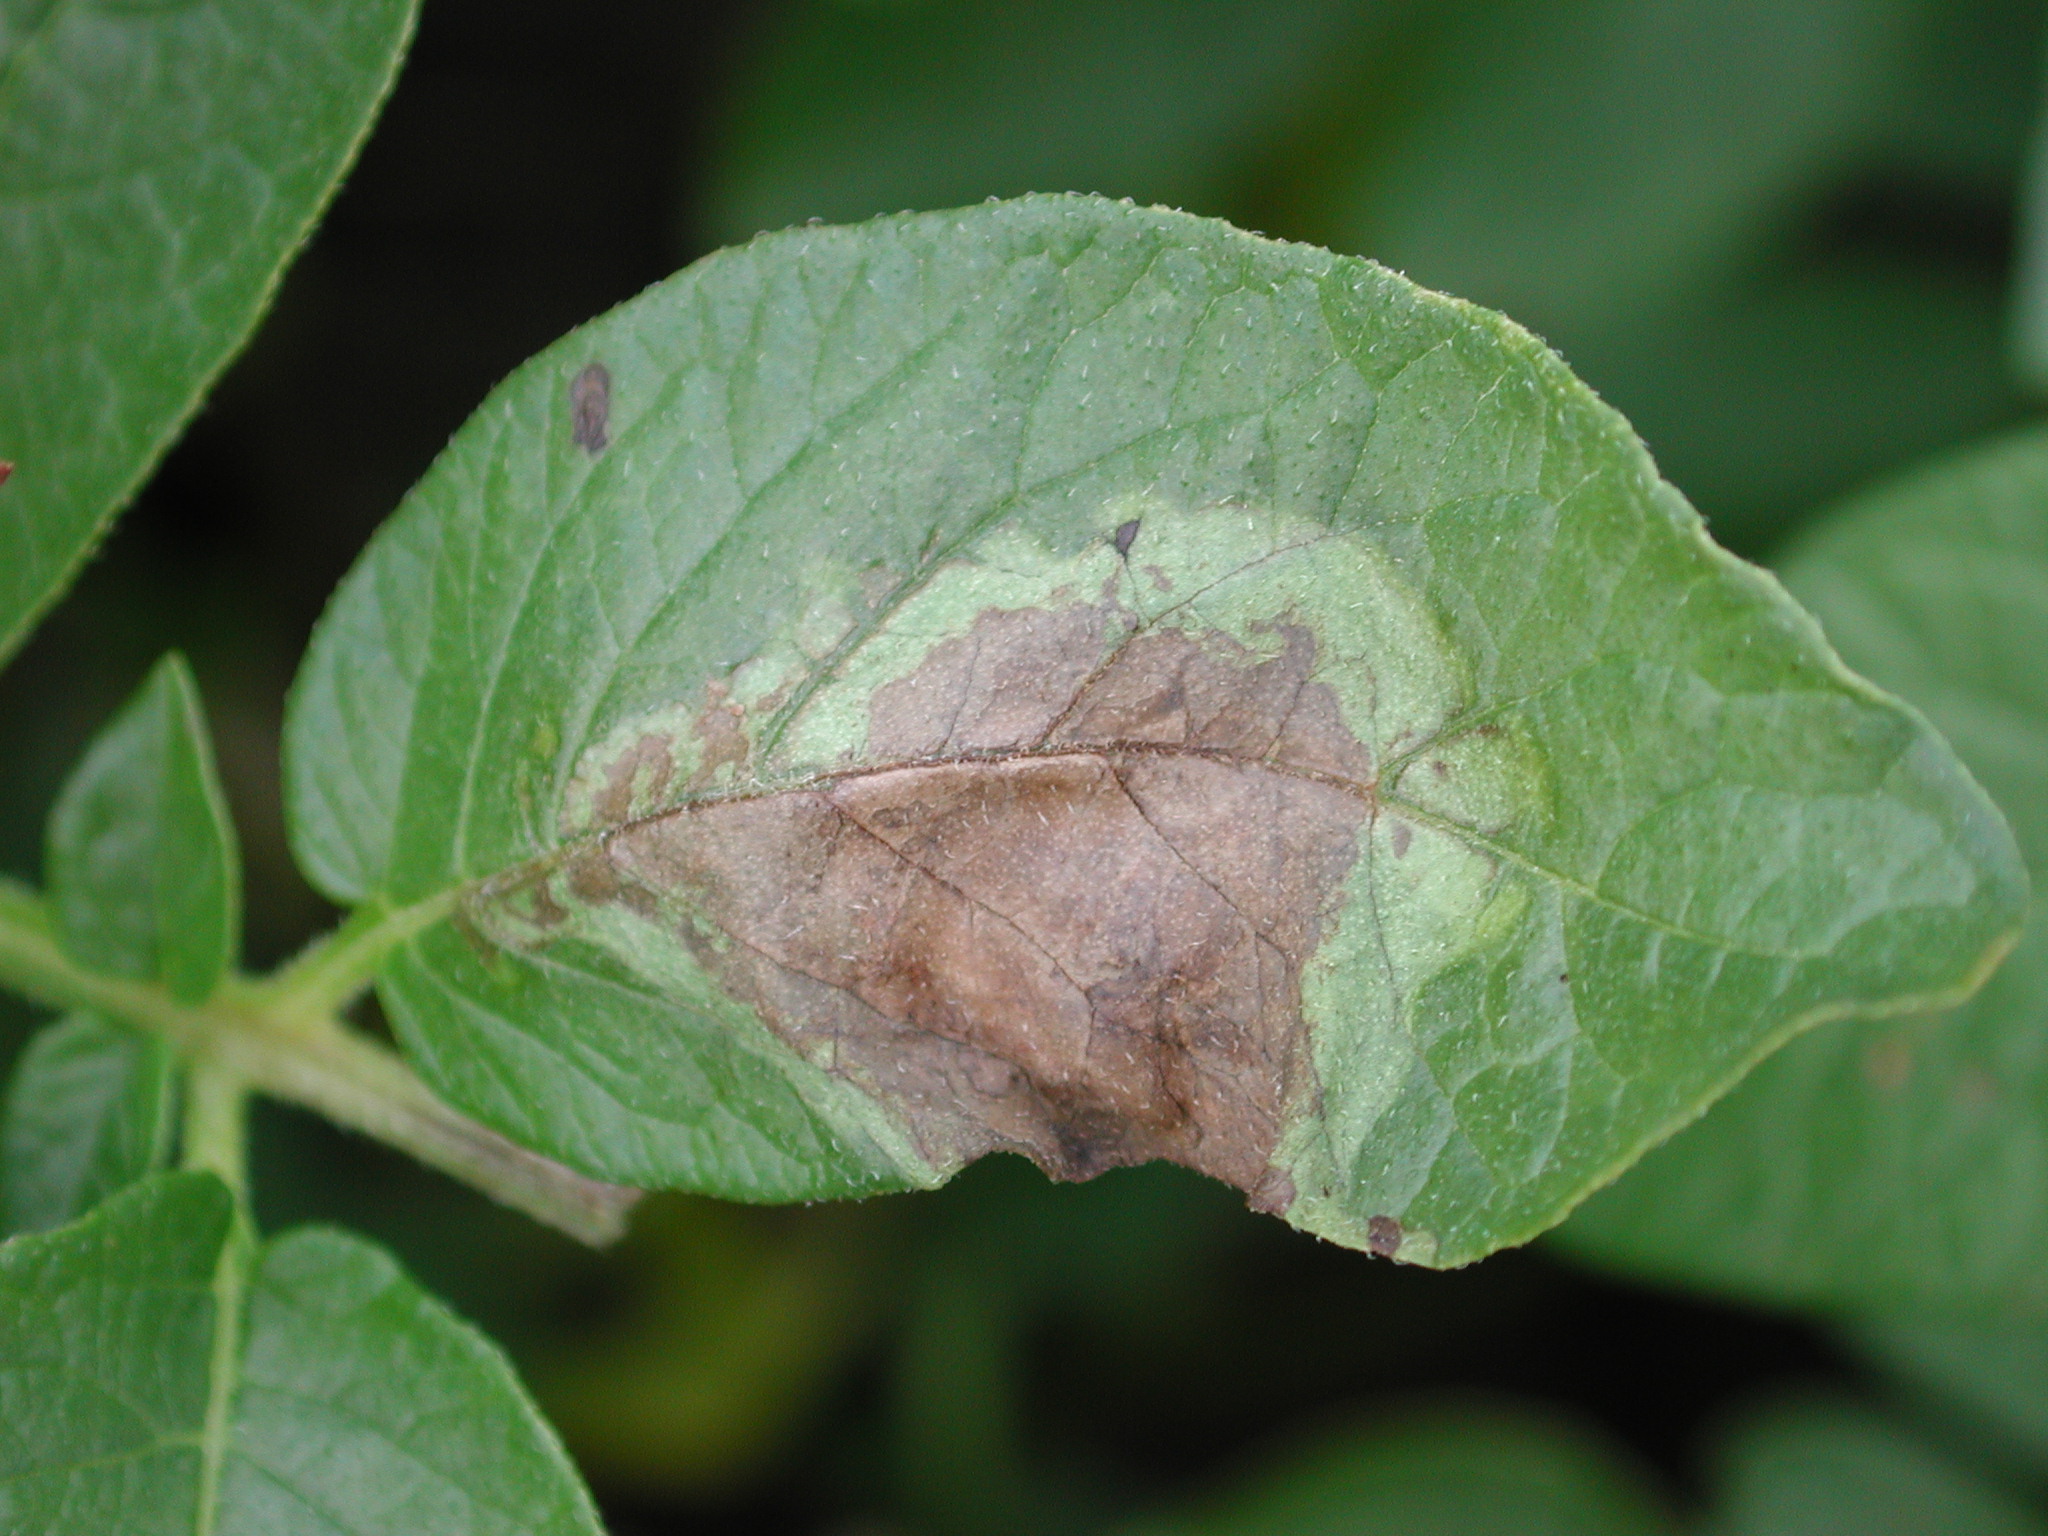 Late blight lesion on potato leaf